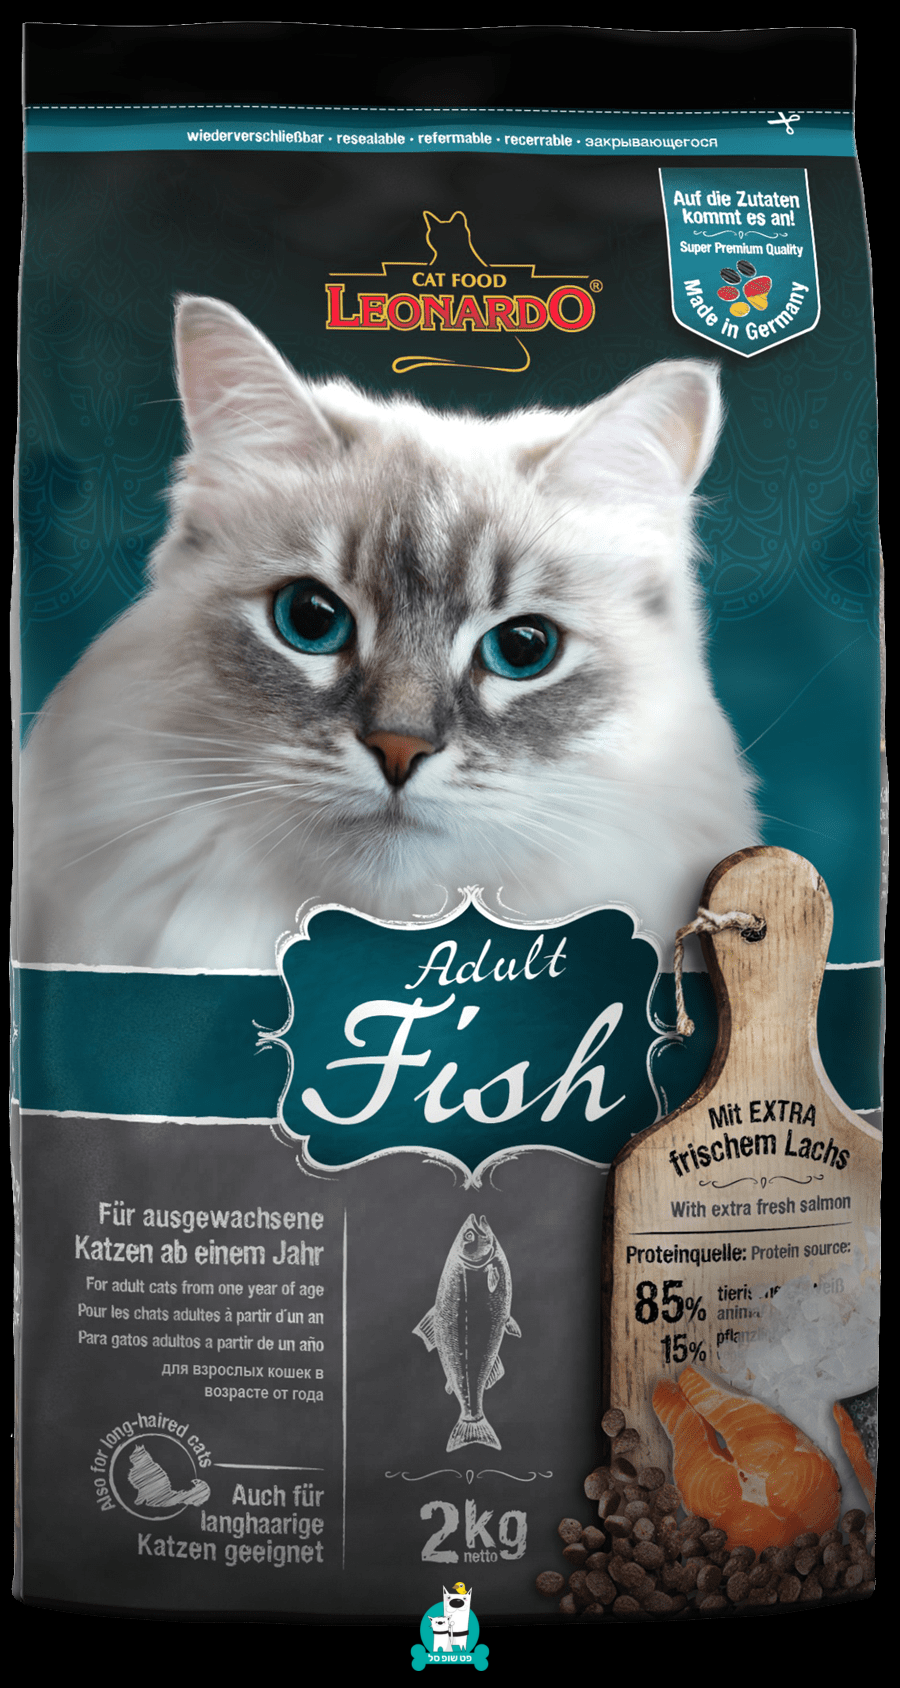 Leonardo Adult Fisch 2kg cat sensetive מזון לחתולים לאונרדו מבצע פטשופסל פיט